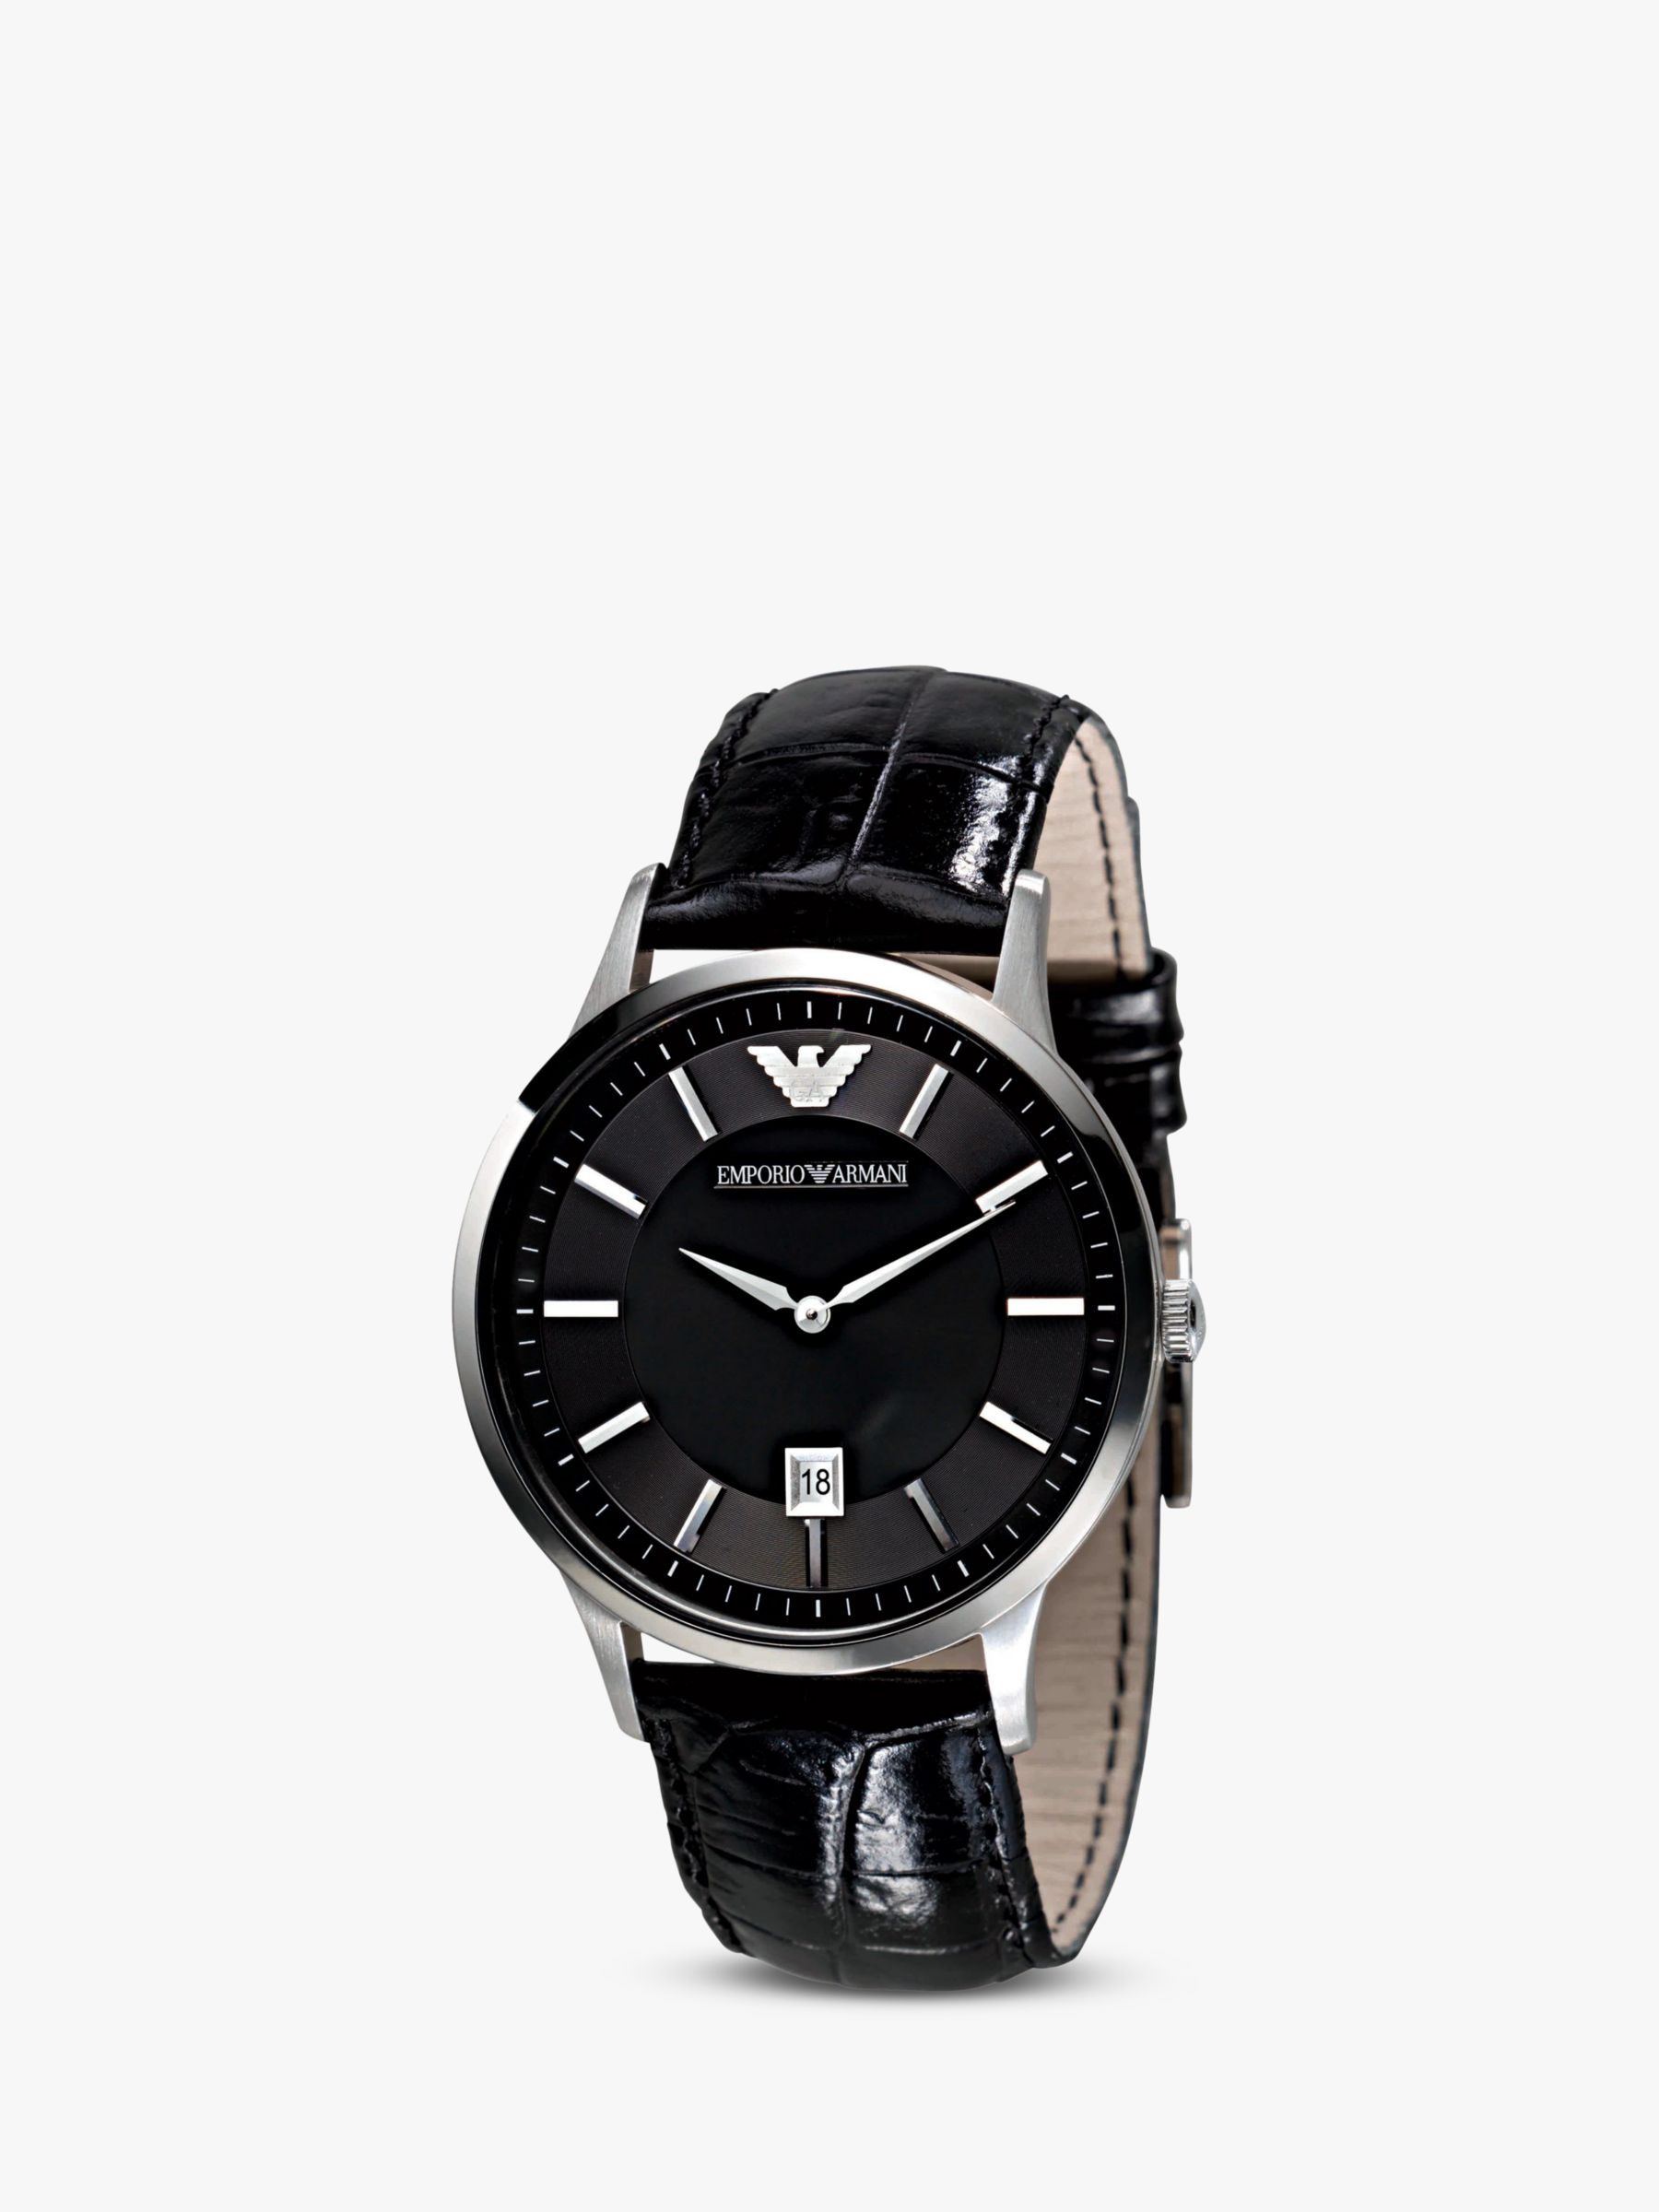 Introducir 70+ imagen emporio armani watch leather band - Abzlocal.mx